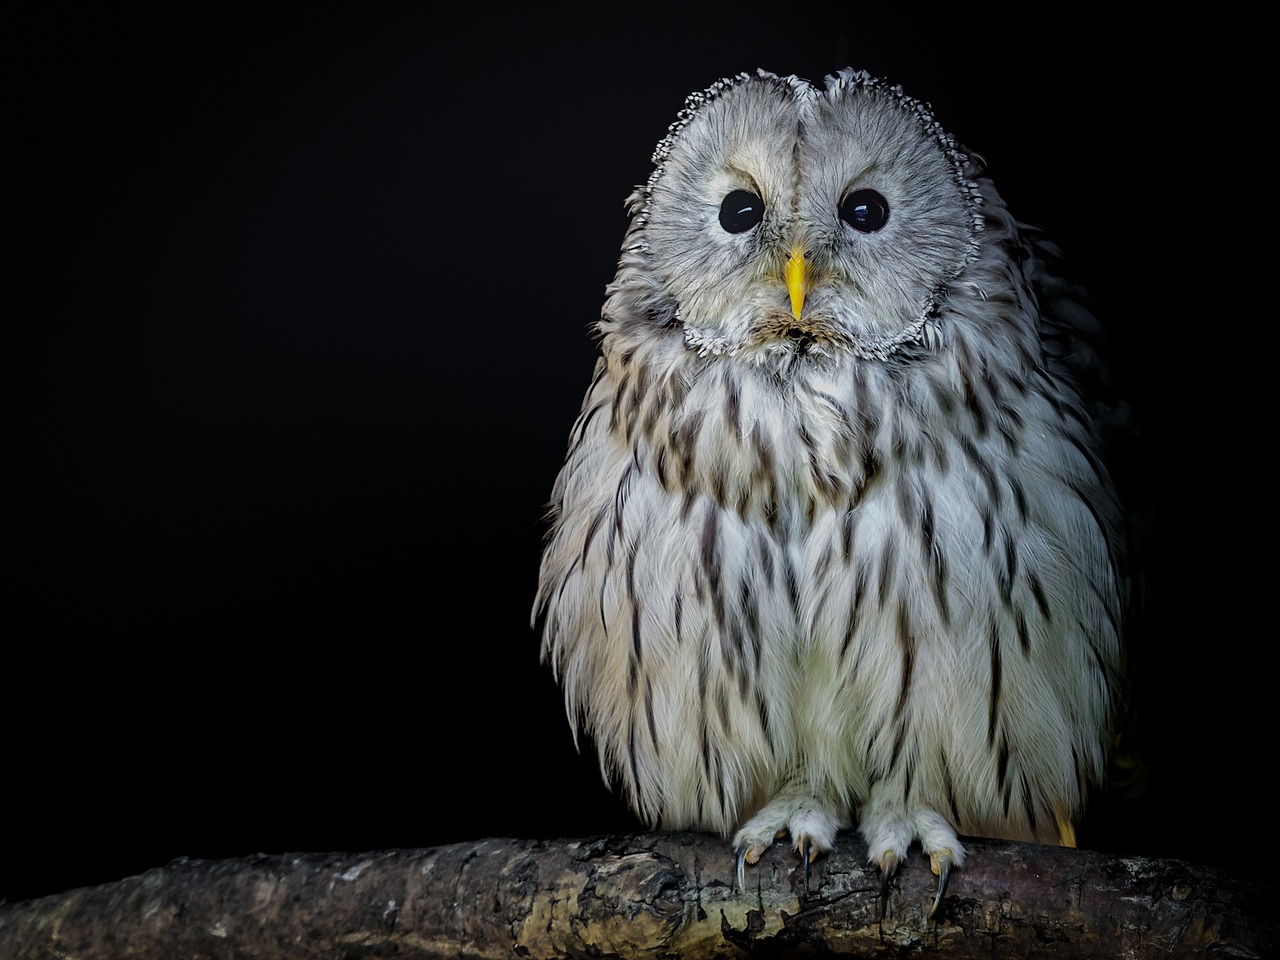 Image - bird owl ural owl plumage eyes